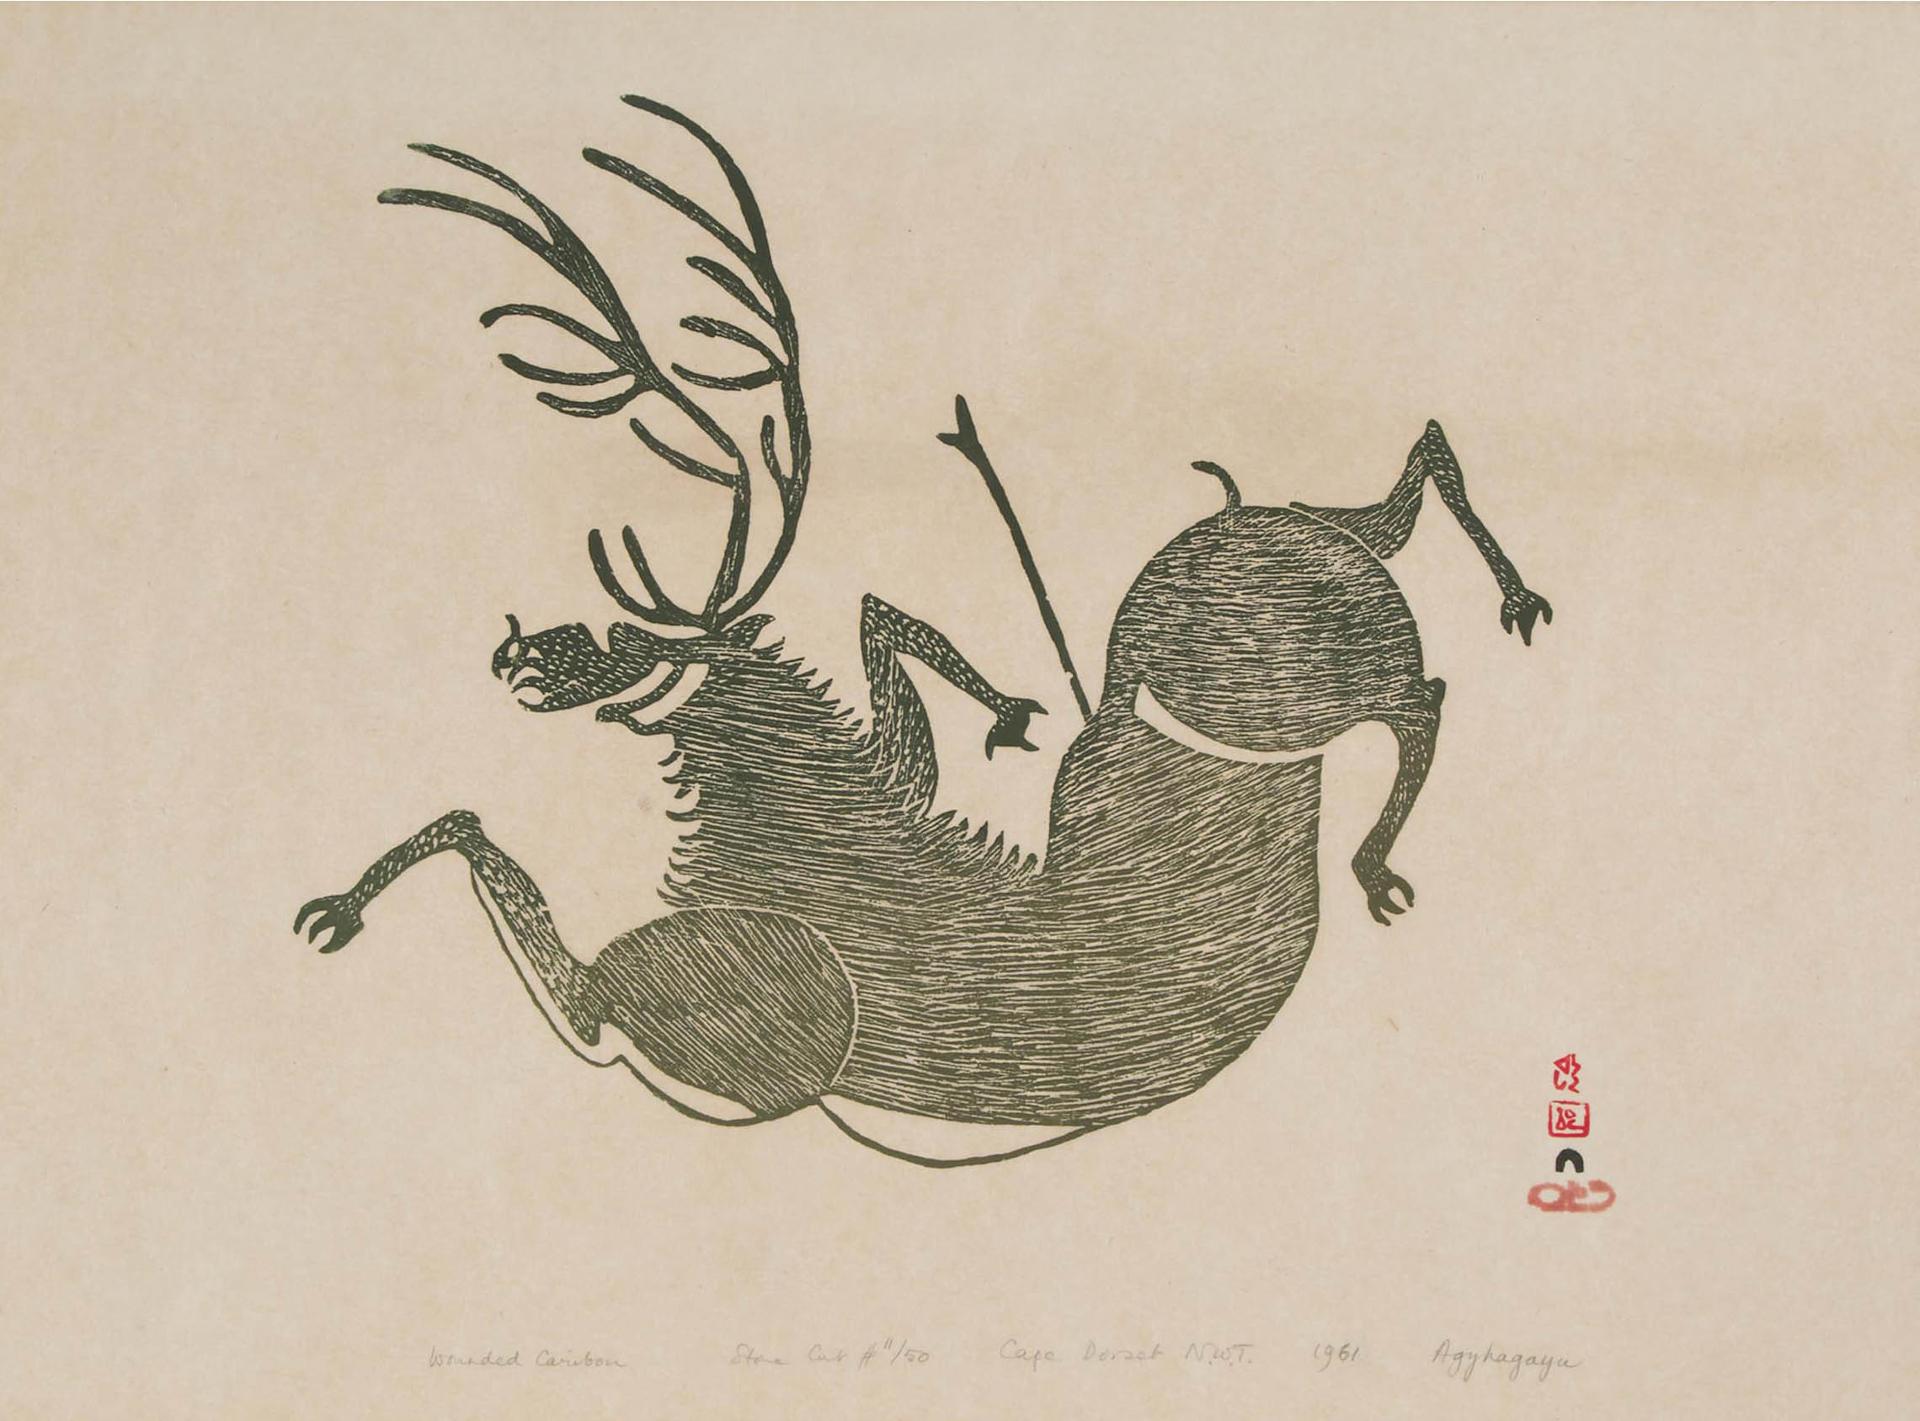 Aqjangajuk (Axangayu) Shaa (1937-2019) - Wounded Caribou